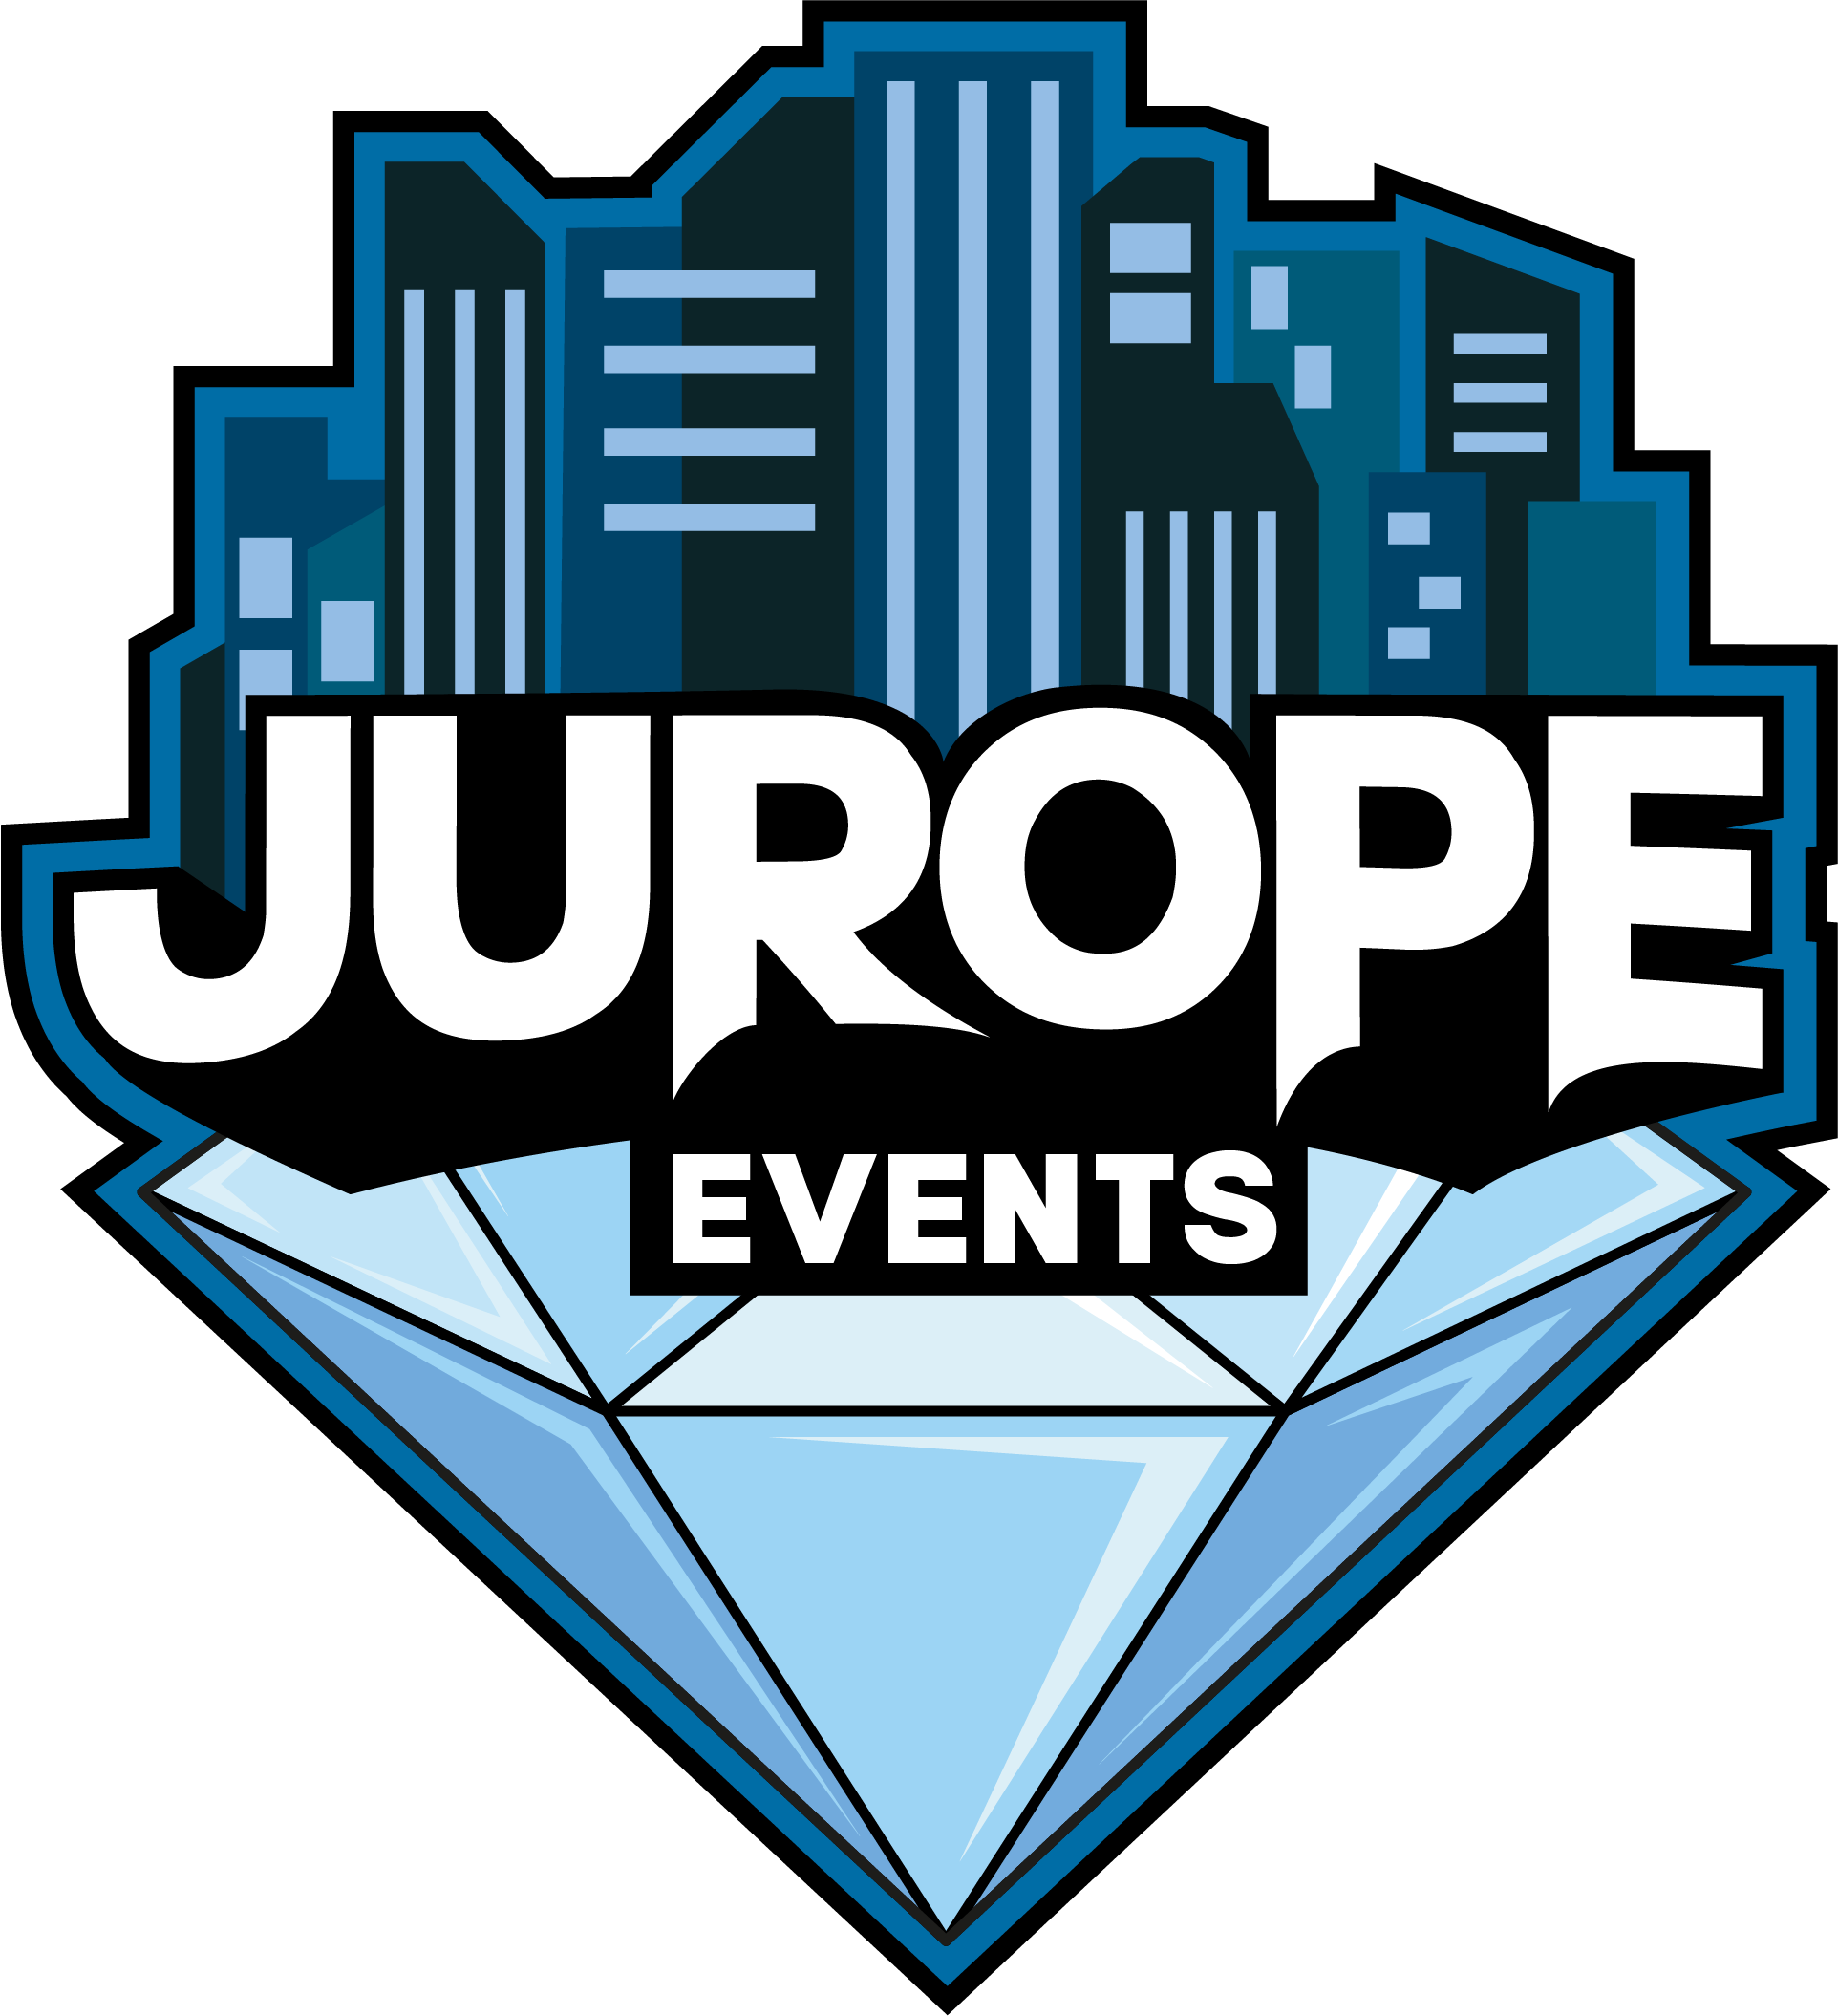 JUROPE Events